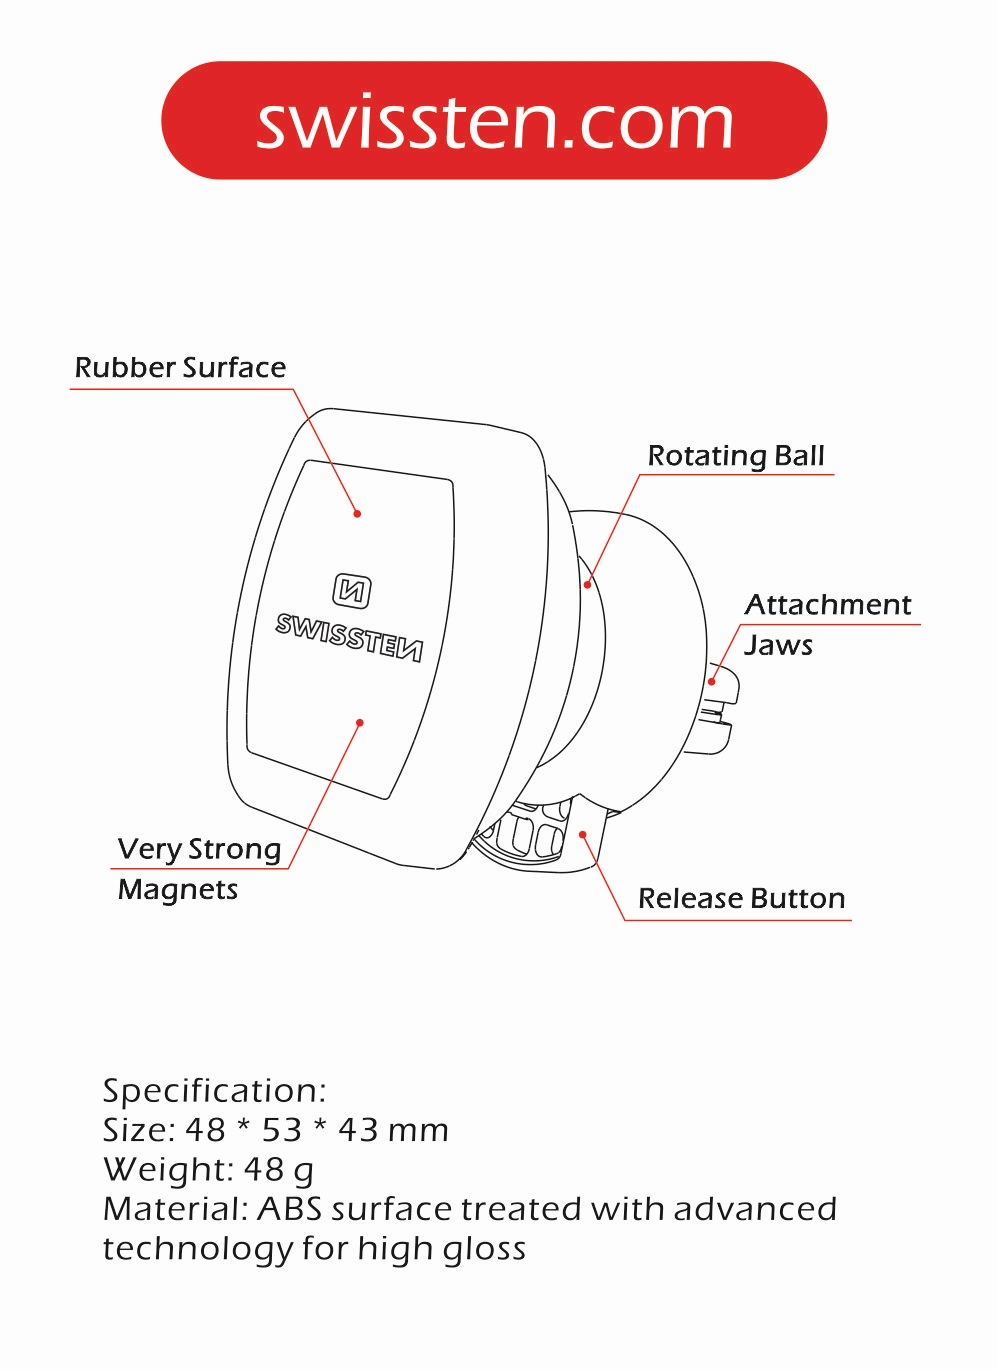 Suport auto Magnetic ventilatia masinii Swissten S-Grip AV-M3 (pachet Eco) thumb